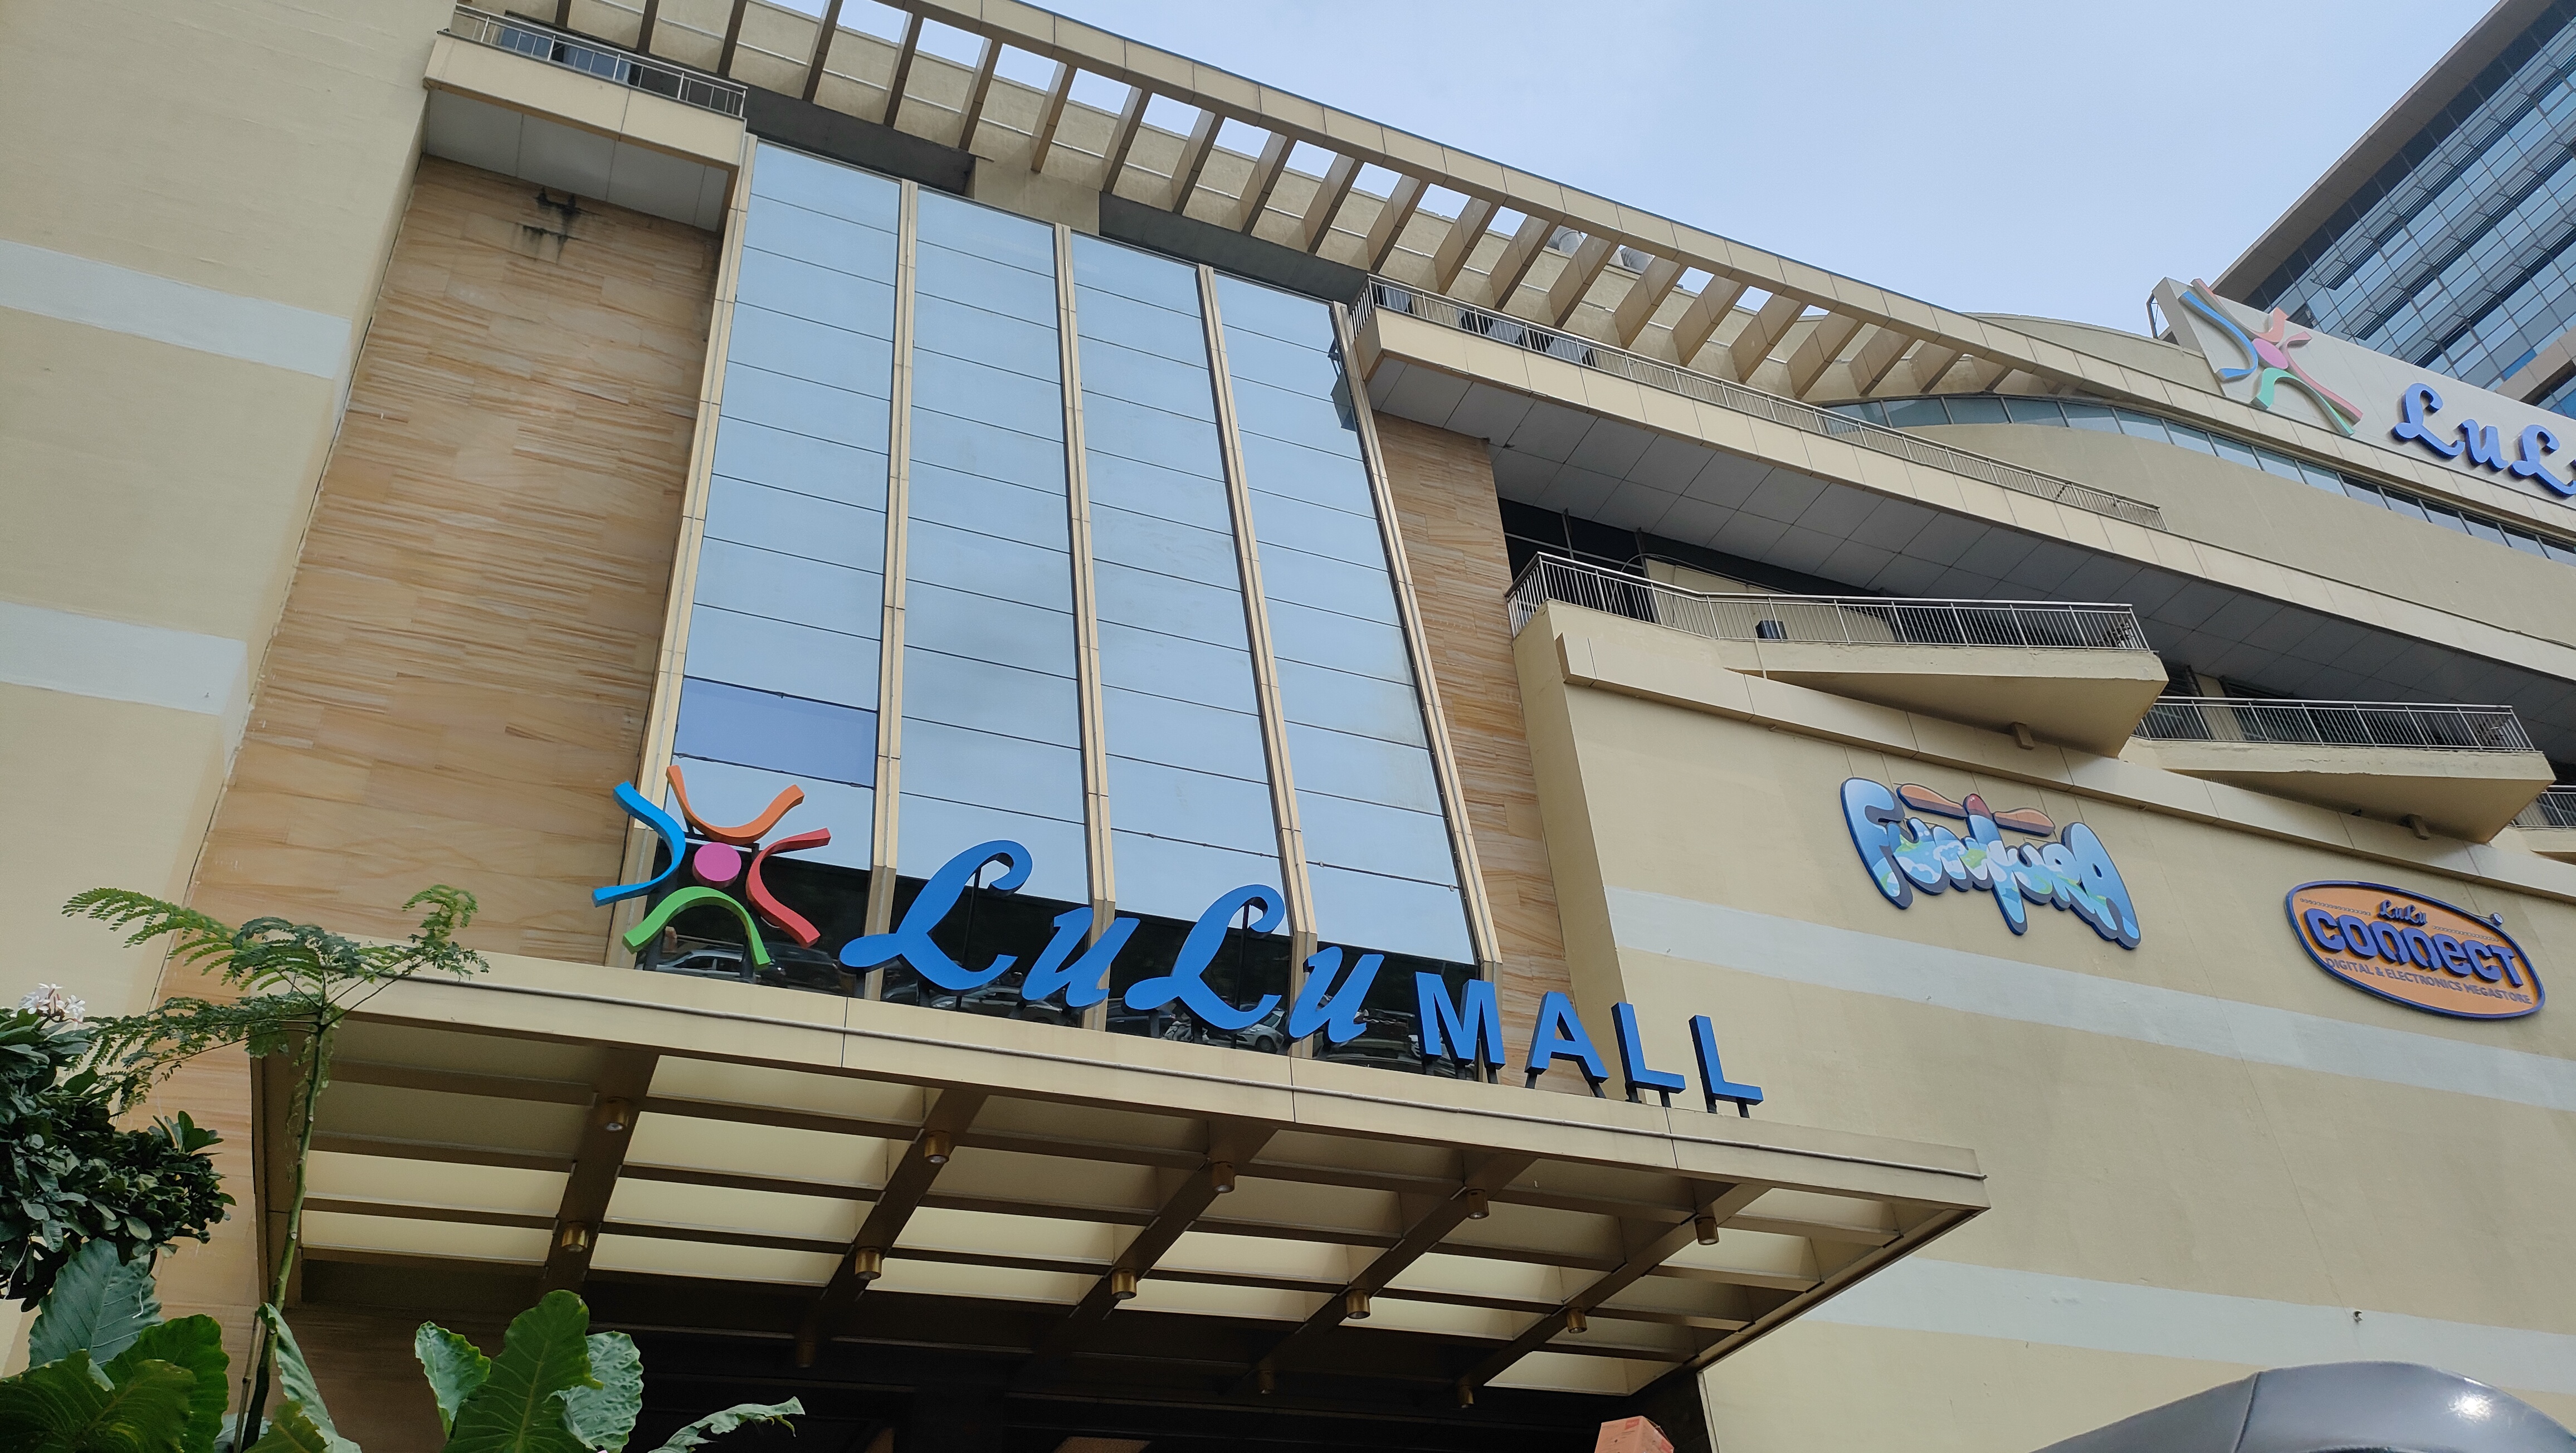 Lulu Mall Hyderabad Full tour Part -1, Lulu hypermarket, Biggest Mall  in Hyderabad